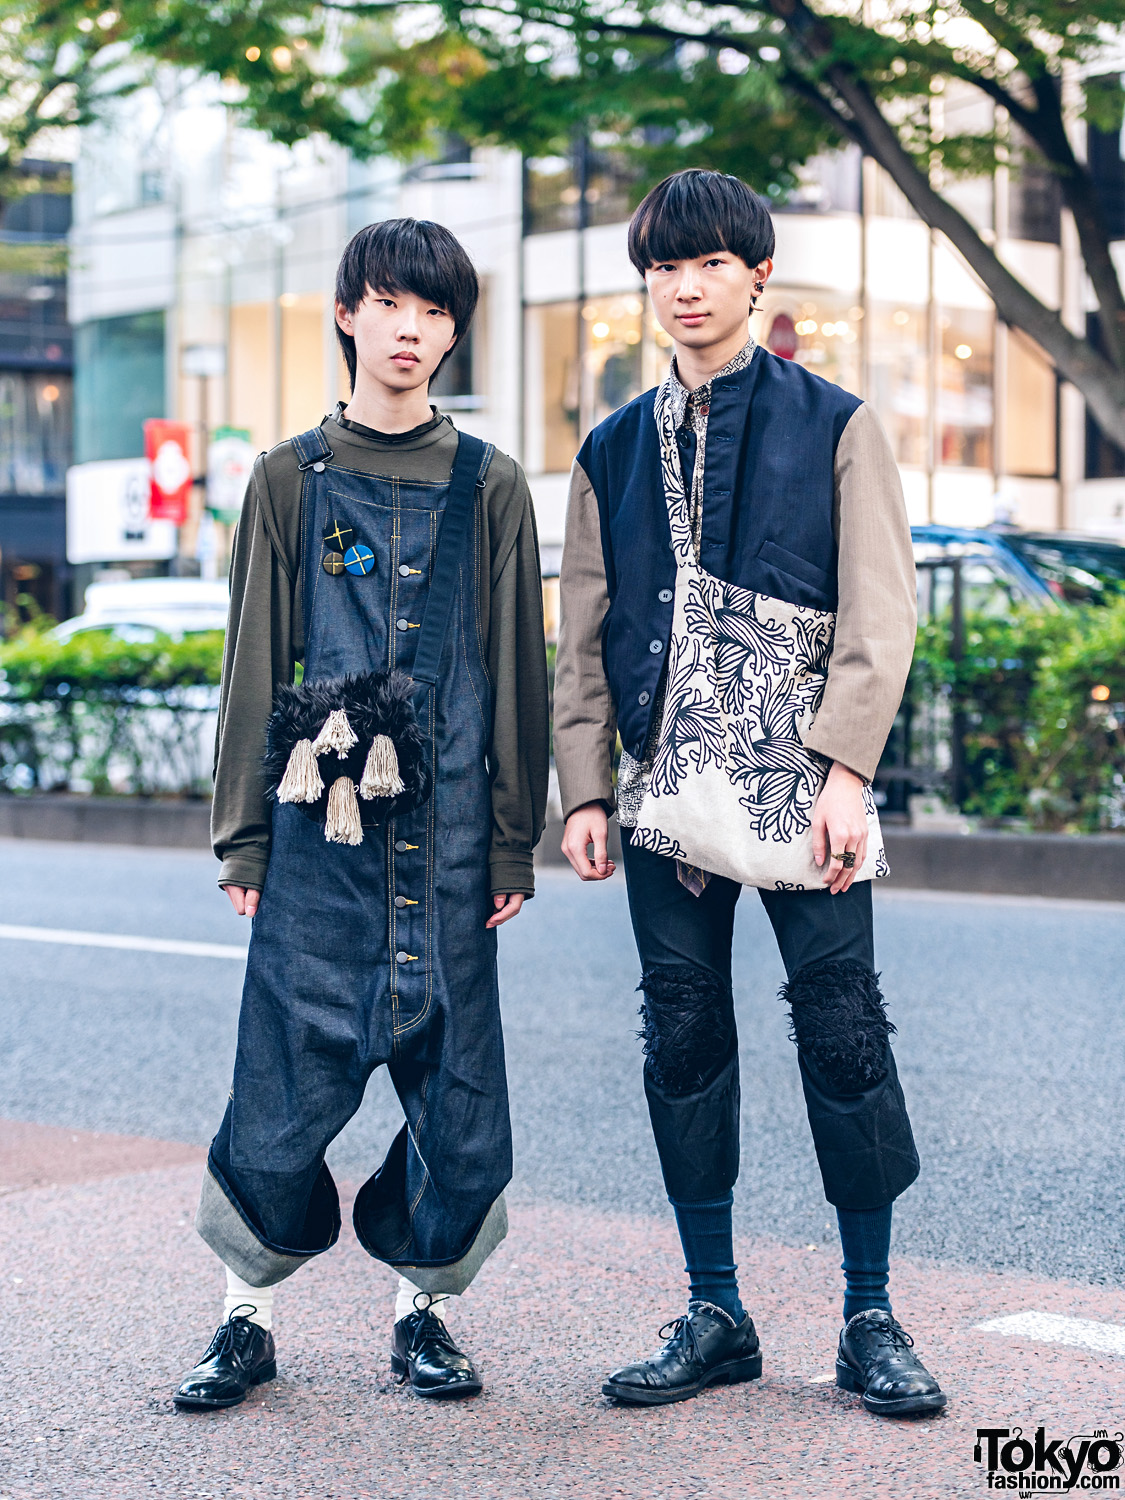 Christopher Nemeth Tokyo Streetwear Styles w/ Rope Print Bag, Denim ...